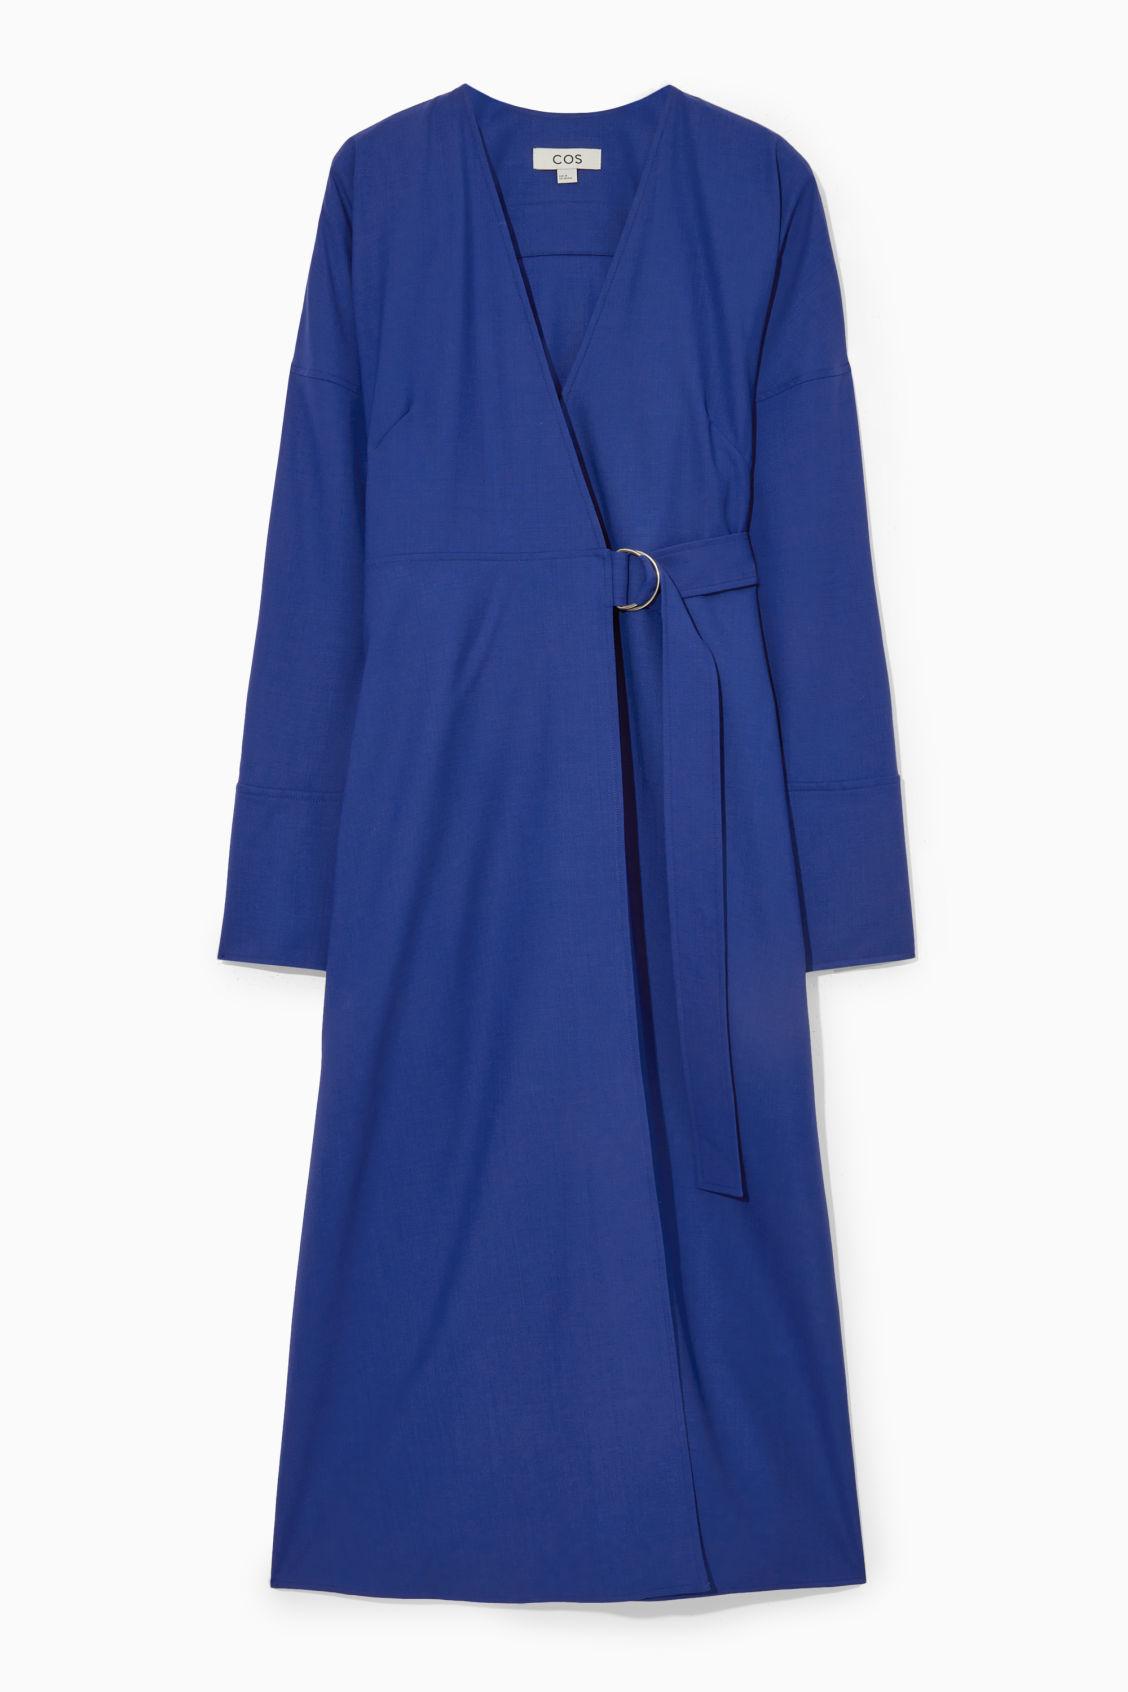 COS Wool-crepe Wrap Dress in Blue | Lyst